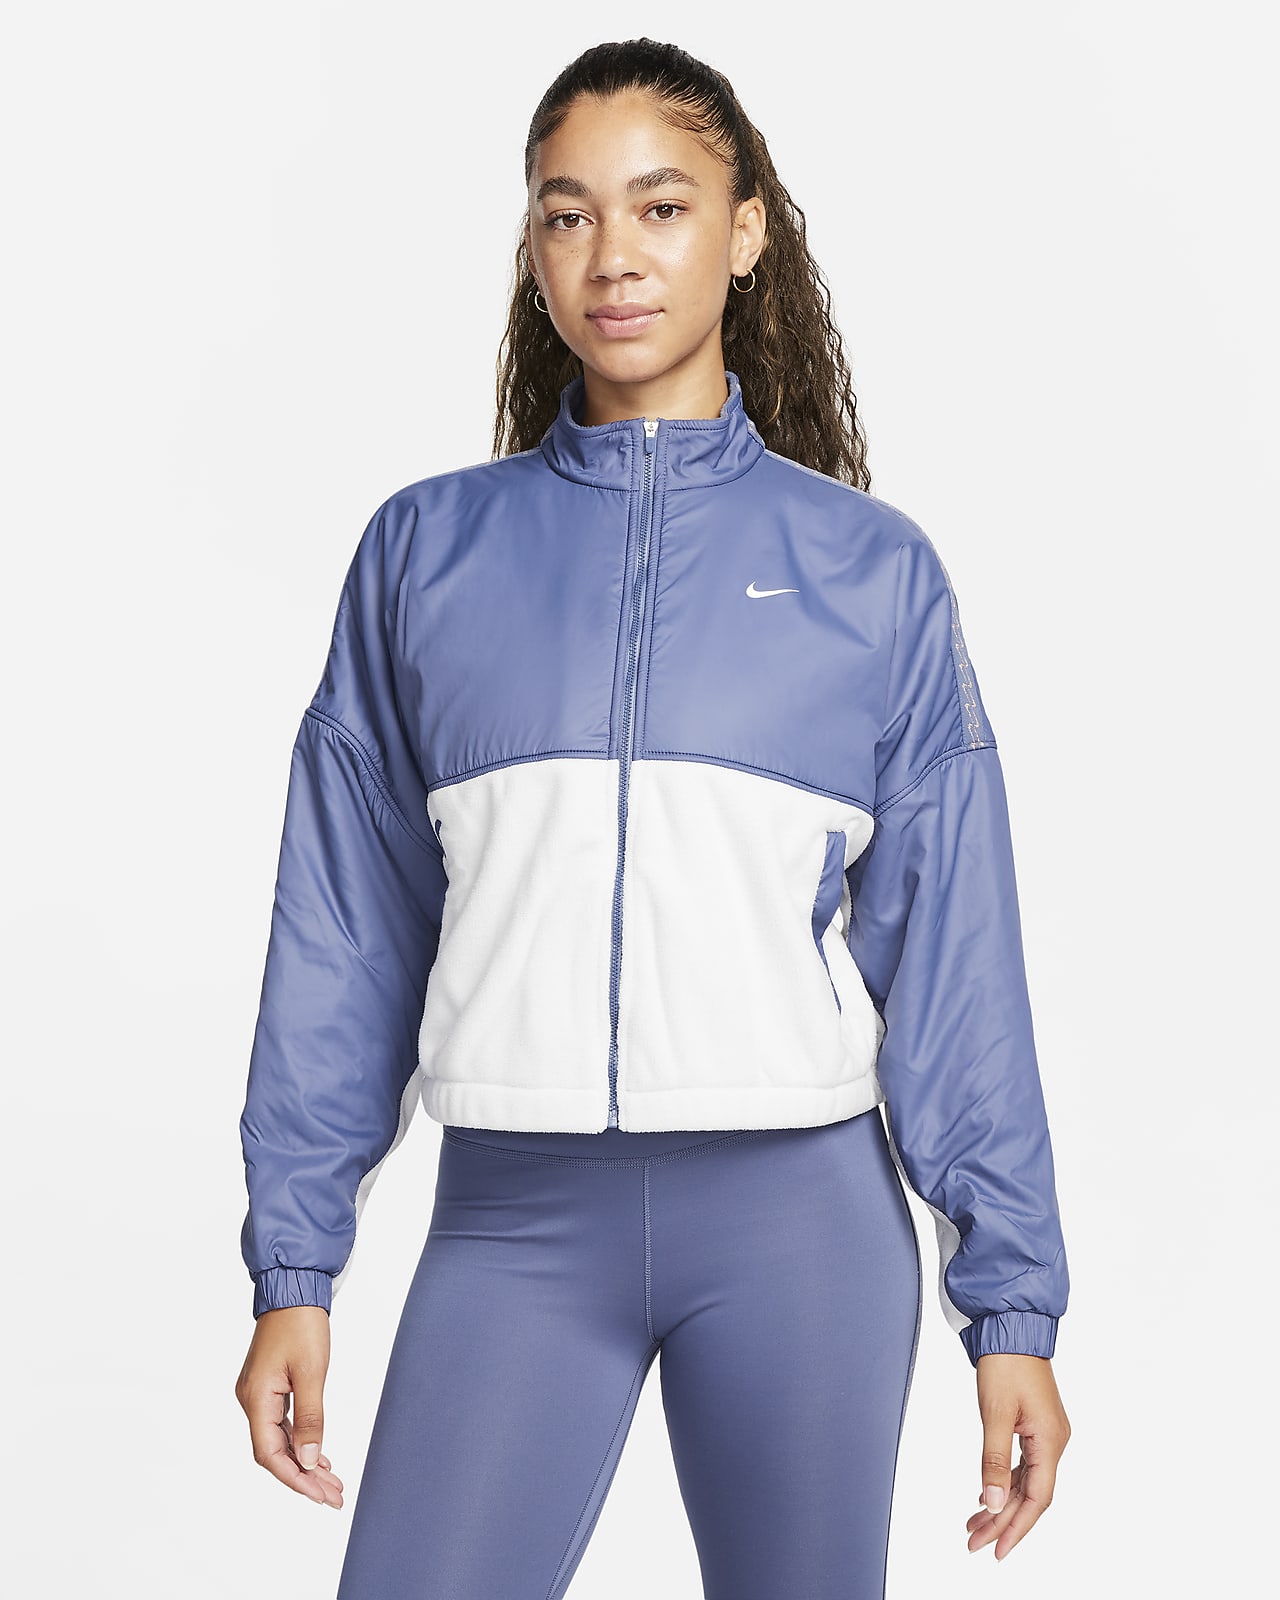 Nike Therma-FIT One Chaqueta de tejido Fleece con cremallera completa - Mujer